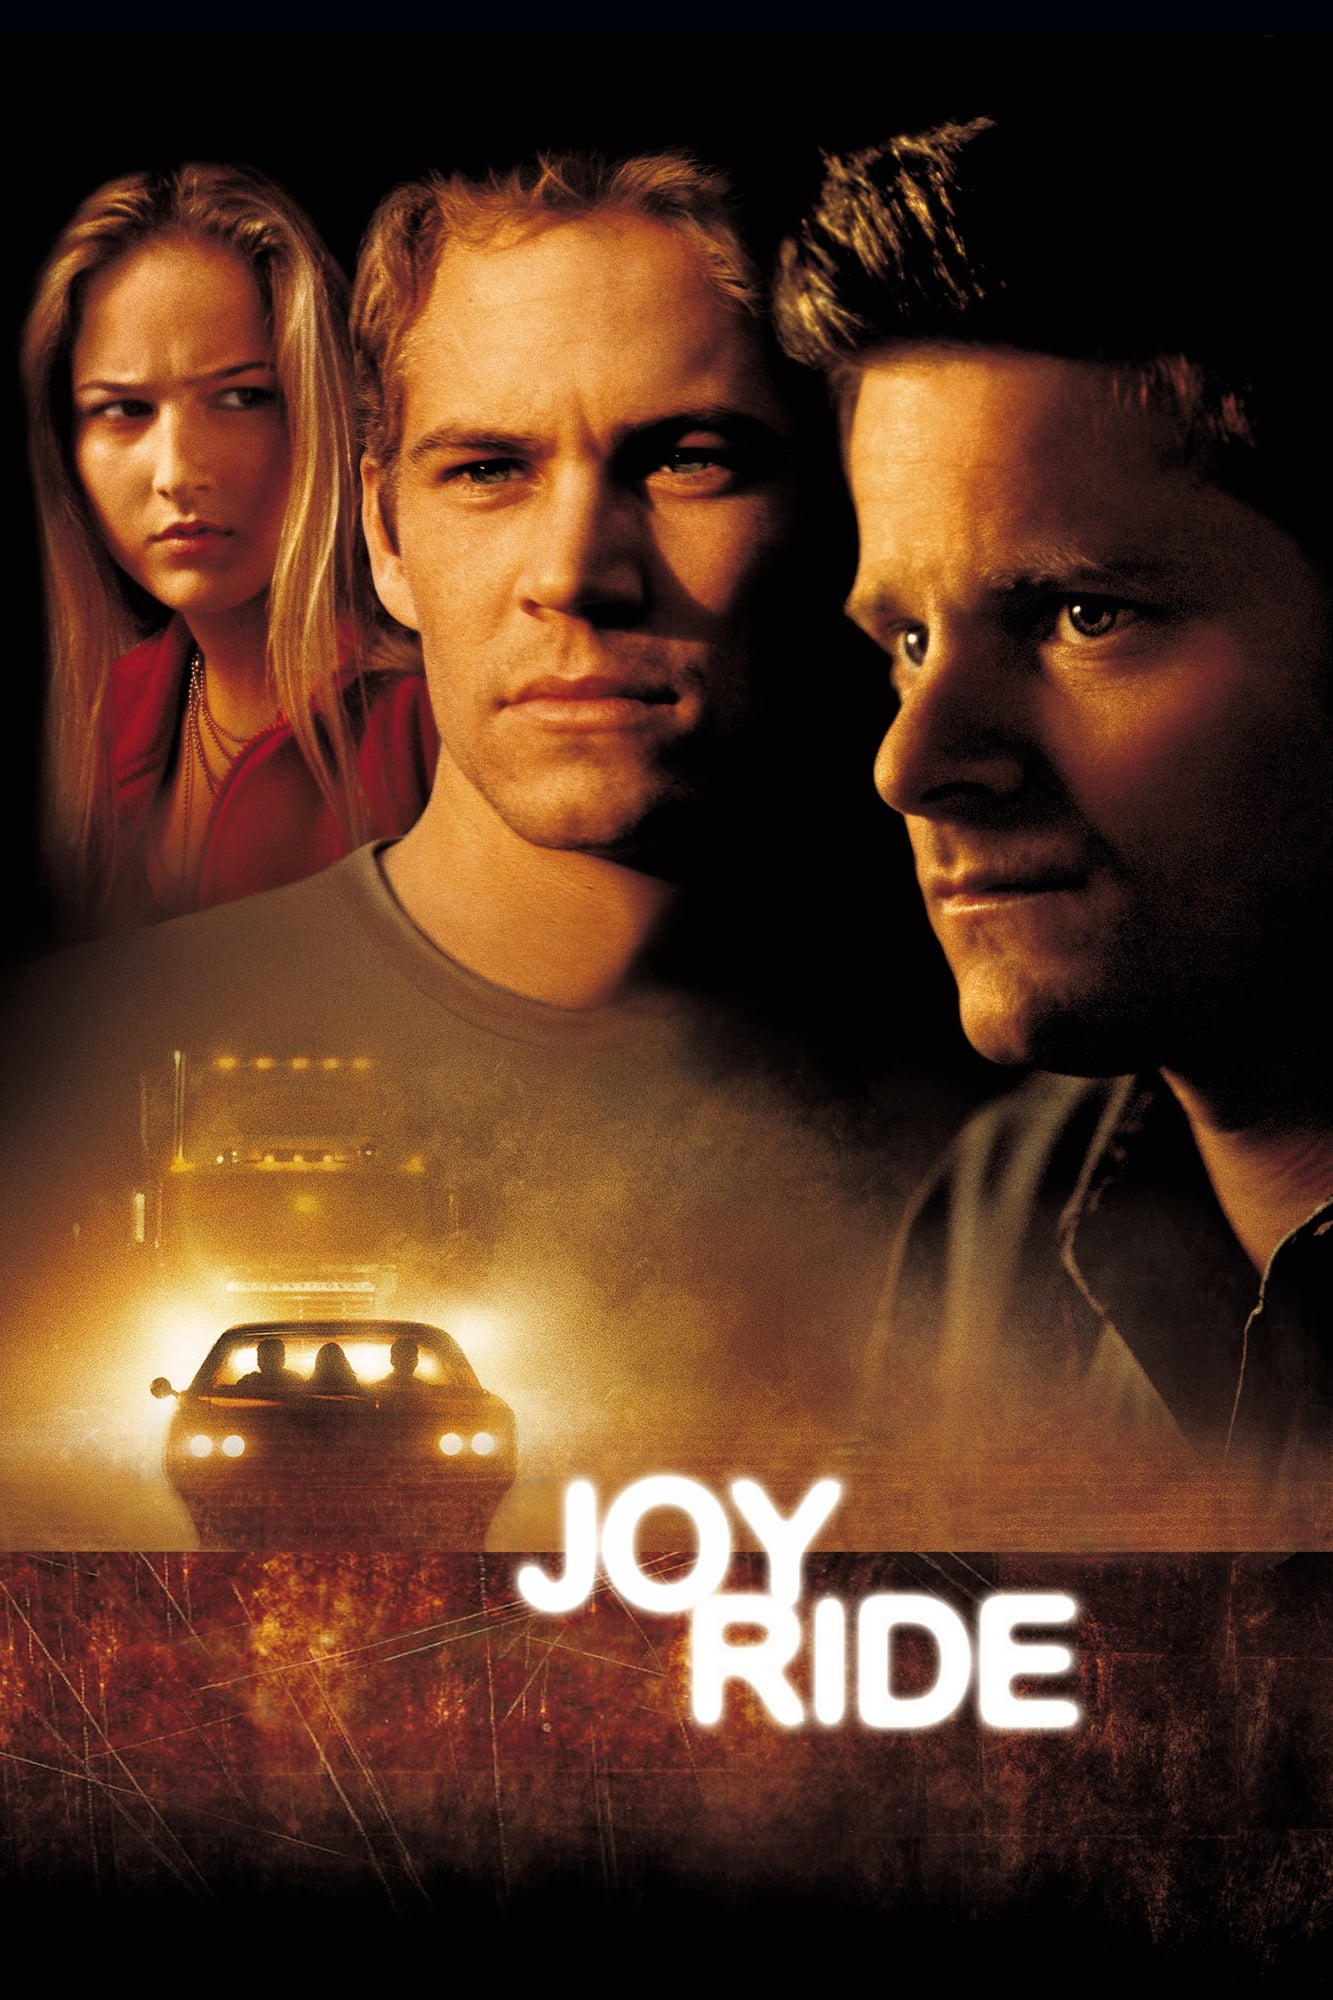 Joyride - Spritztour (2001)